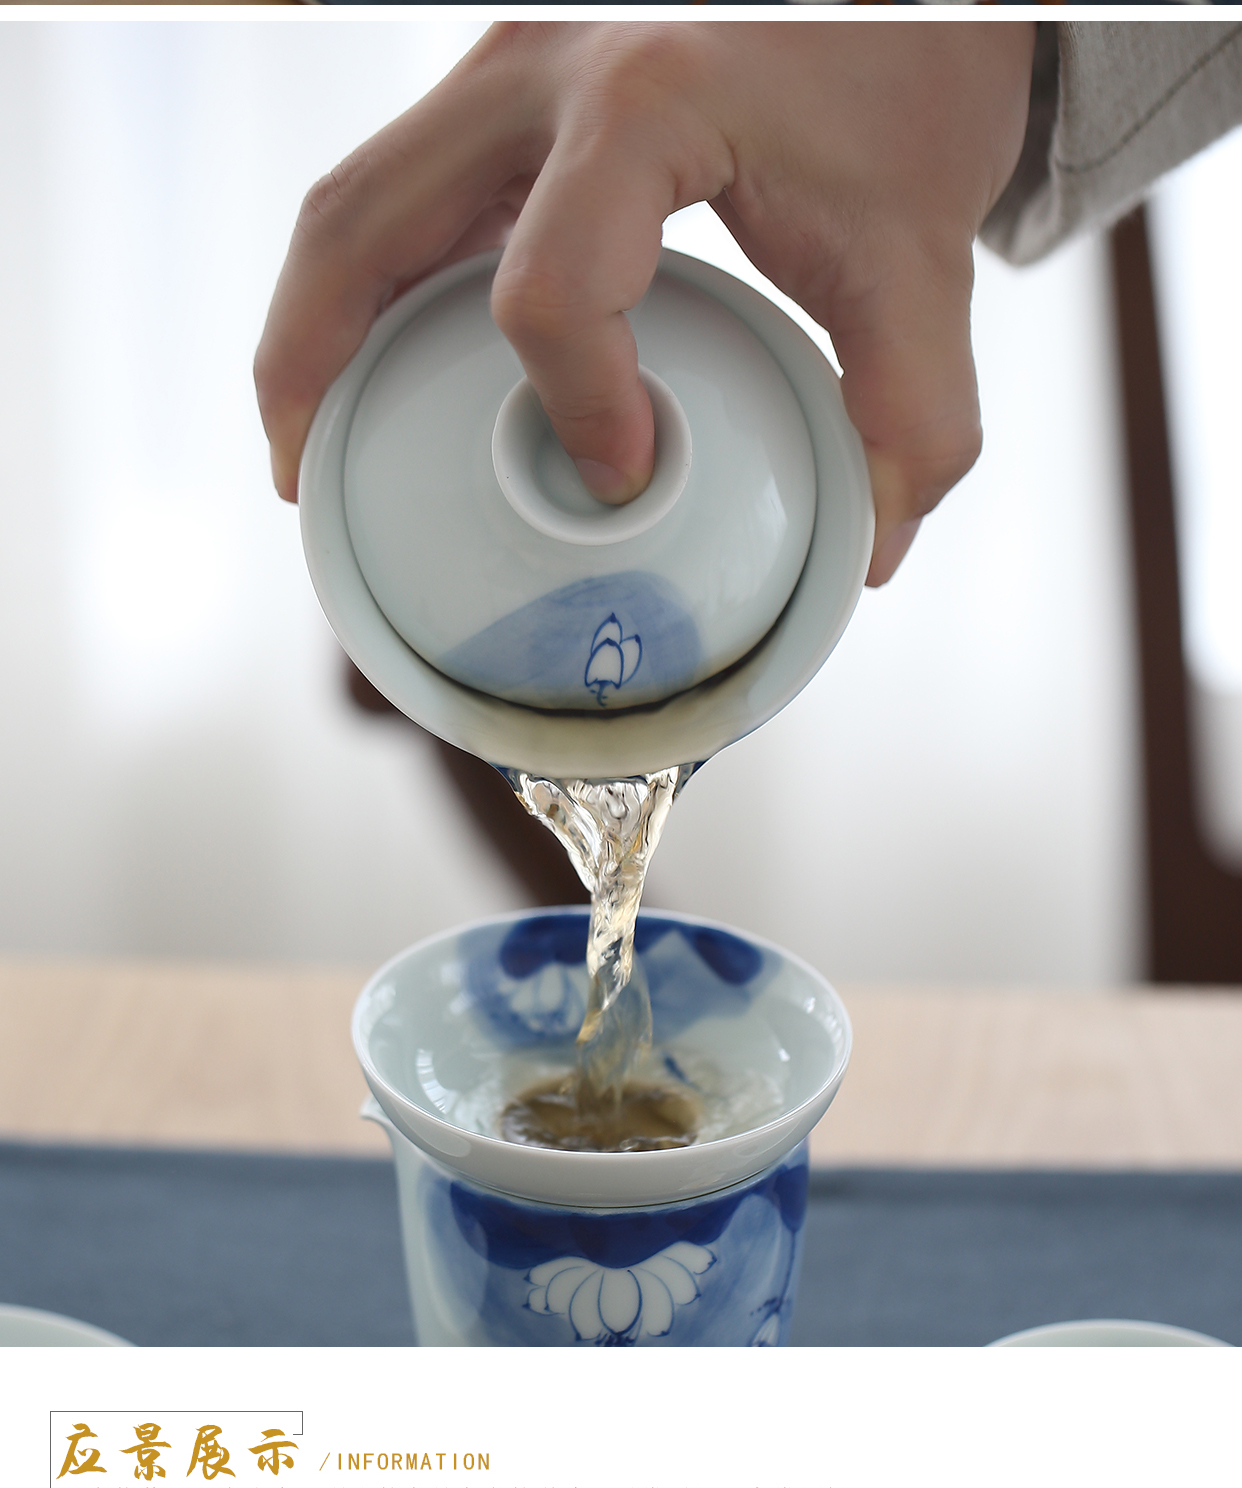 Dehua white porcelain only three tureen large cups tea bowl of kung fu tea set a single ceramic hand - made lotus tea bowl